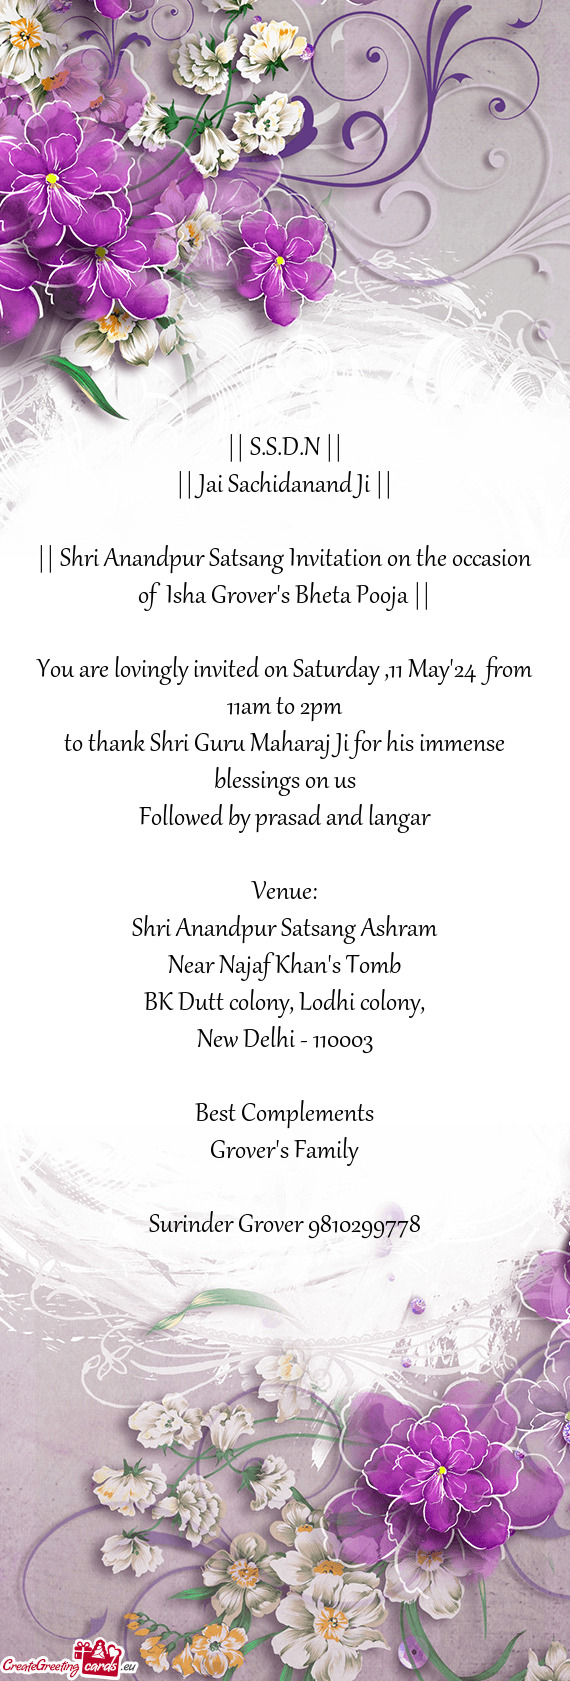 || Shri Anandpur Satsang Invitation on the occasion of Isha Grover